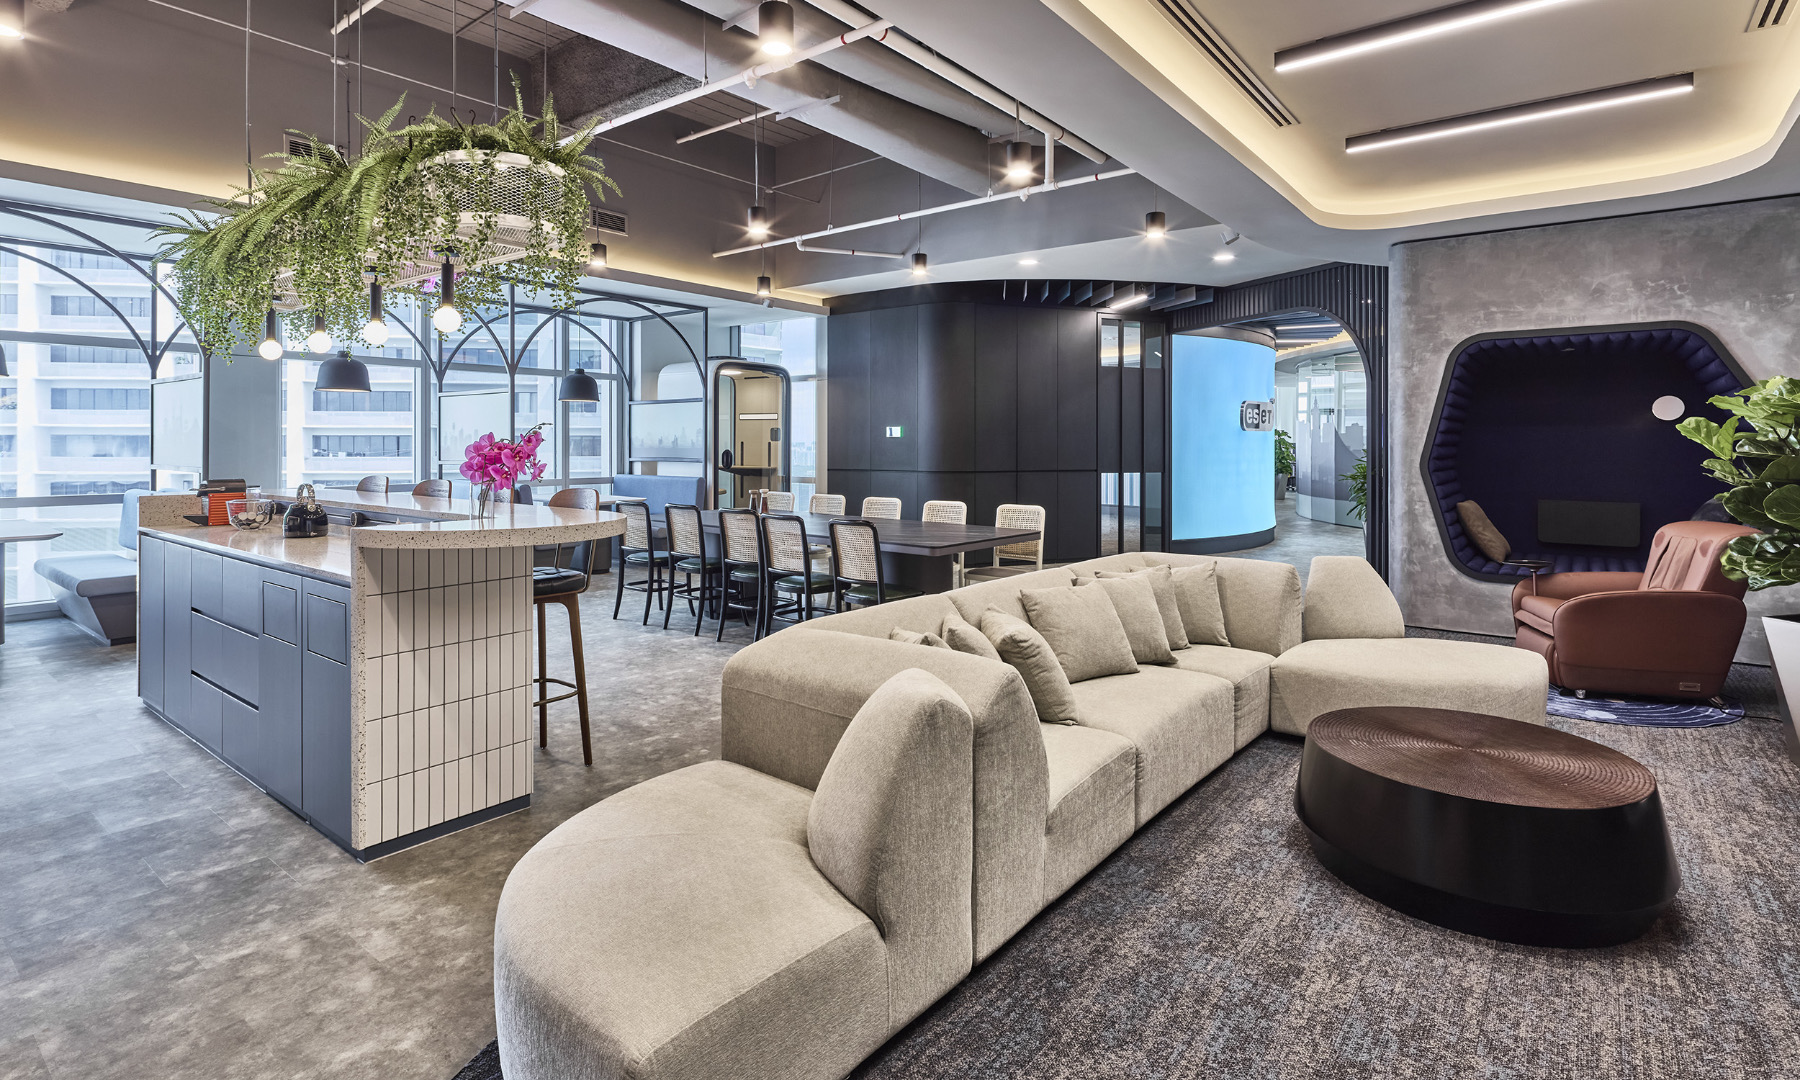 A Look Inside Eset’s New Singapore Office - Officelovin'